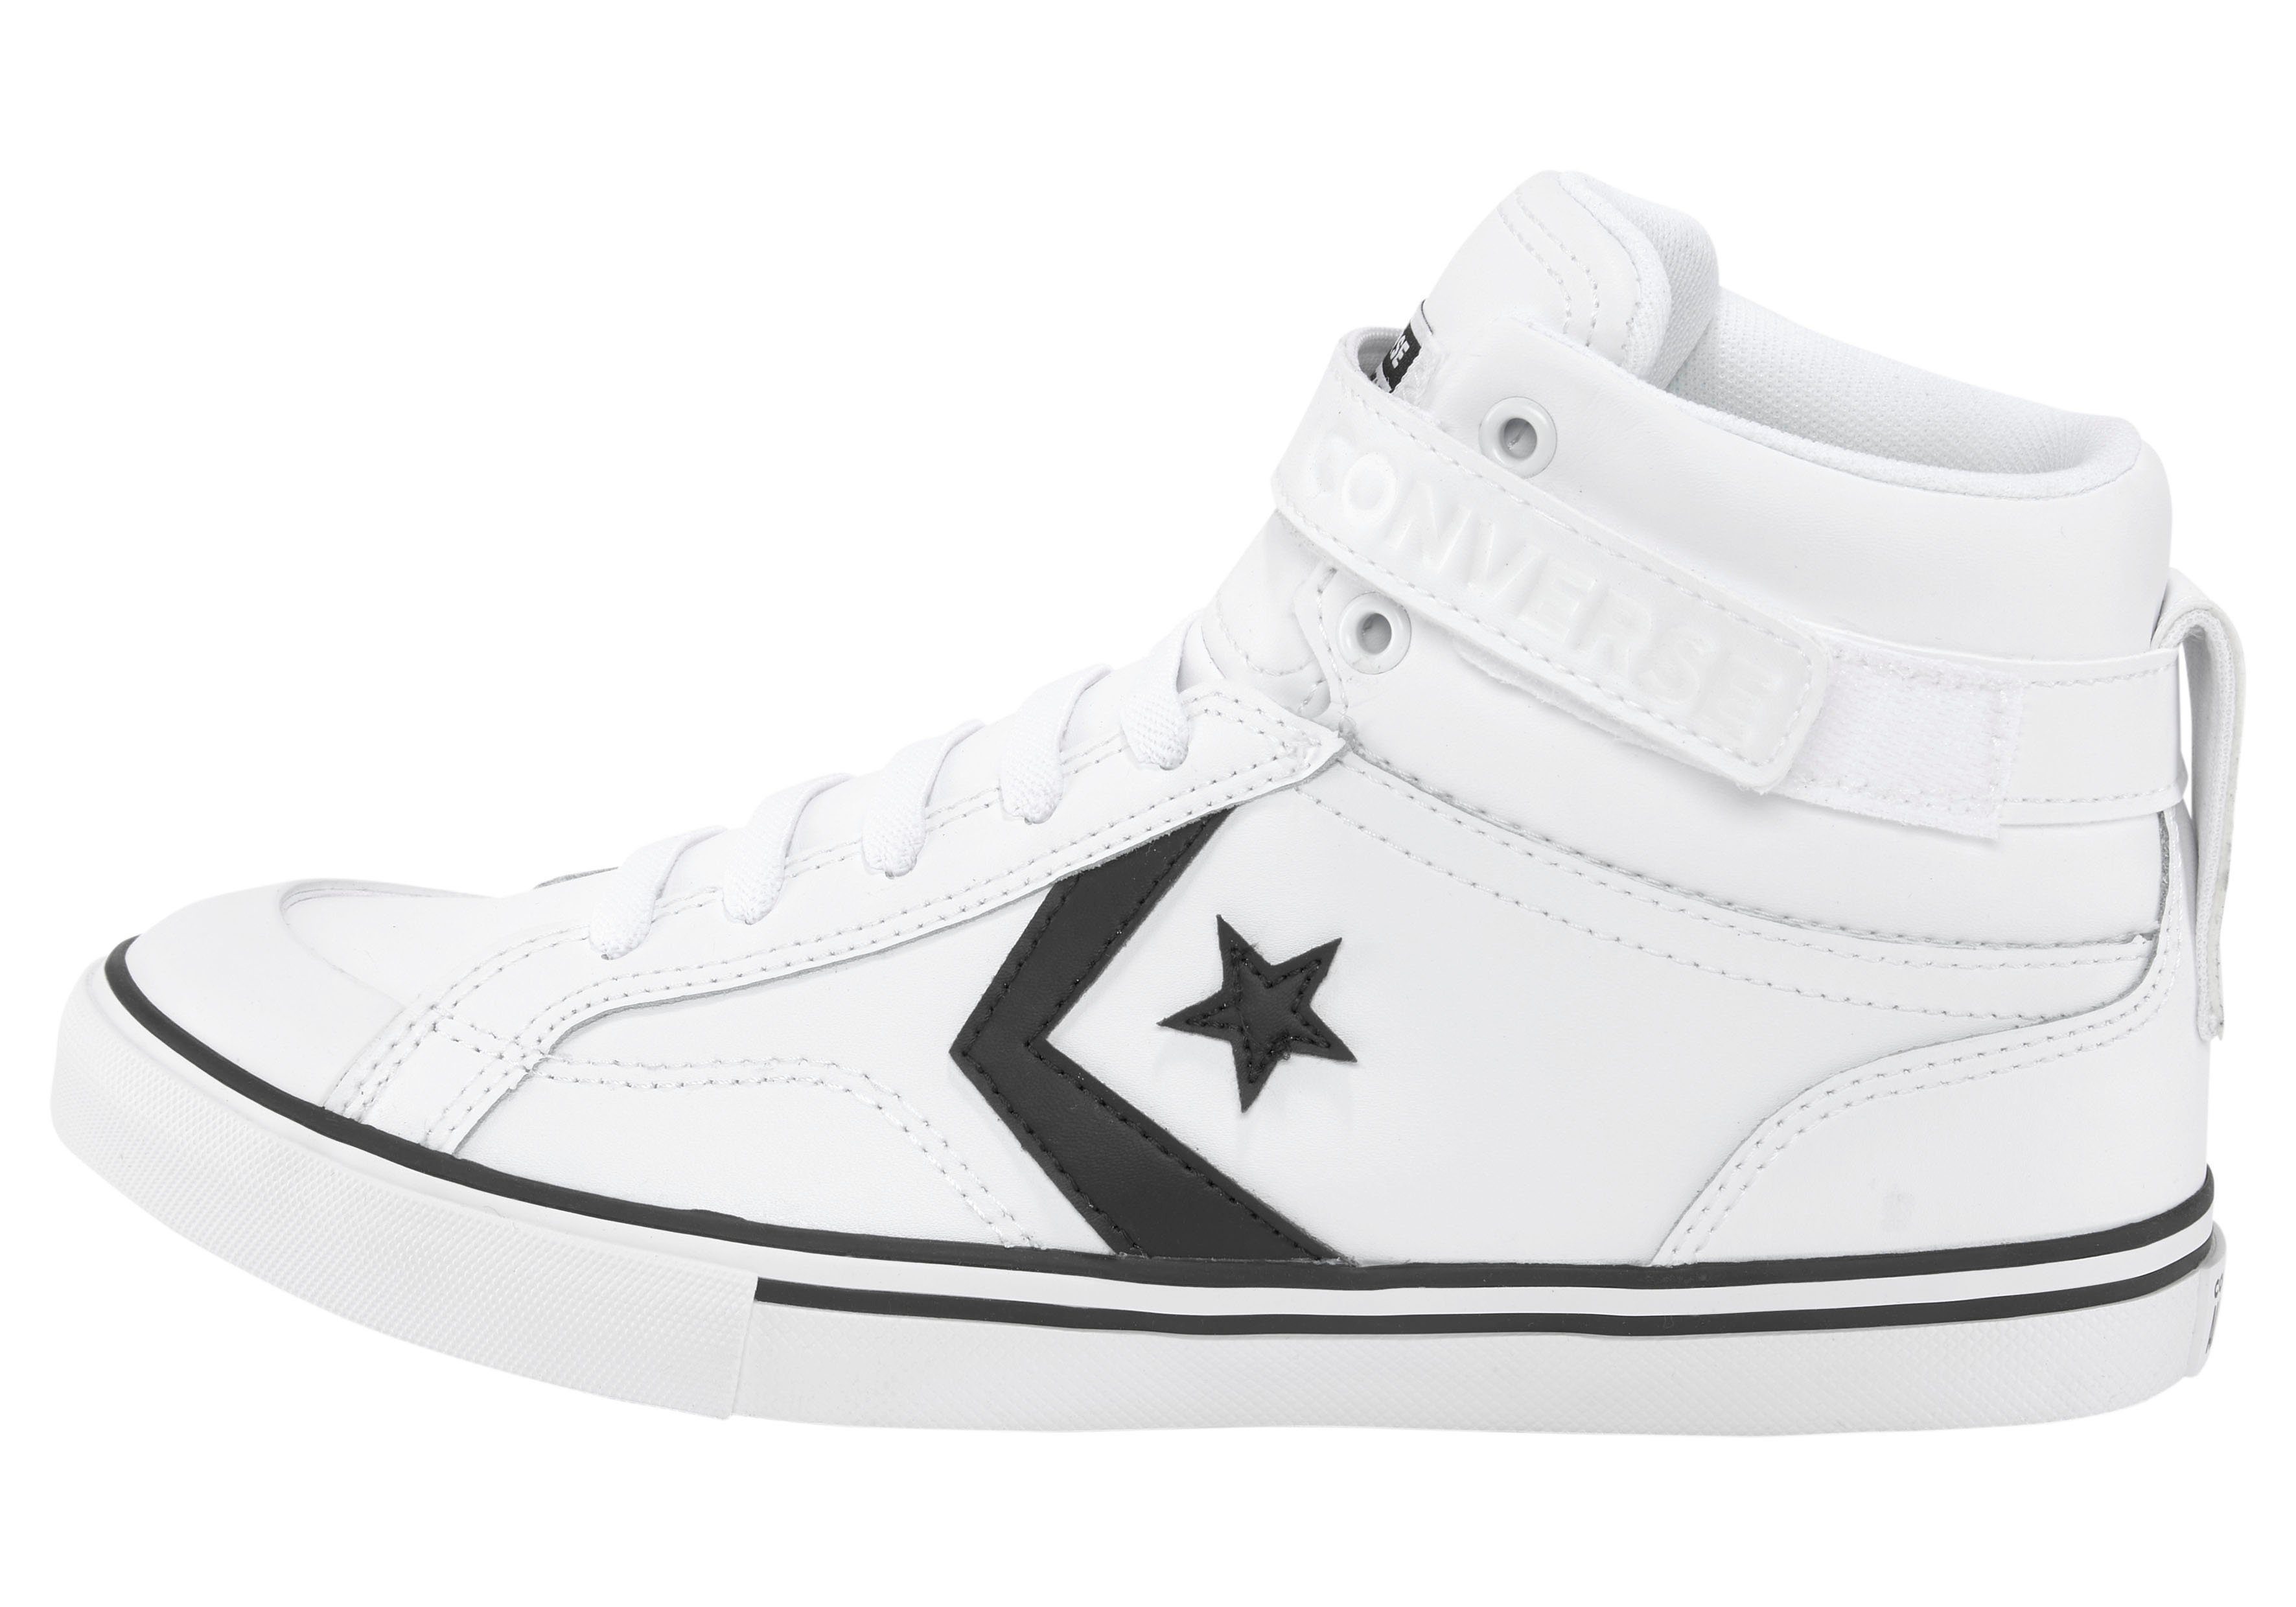 LEATHER BLAZE PRO Converse weiß-schwarz Sneaker STRAP